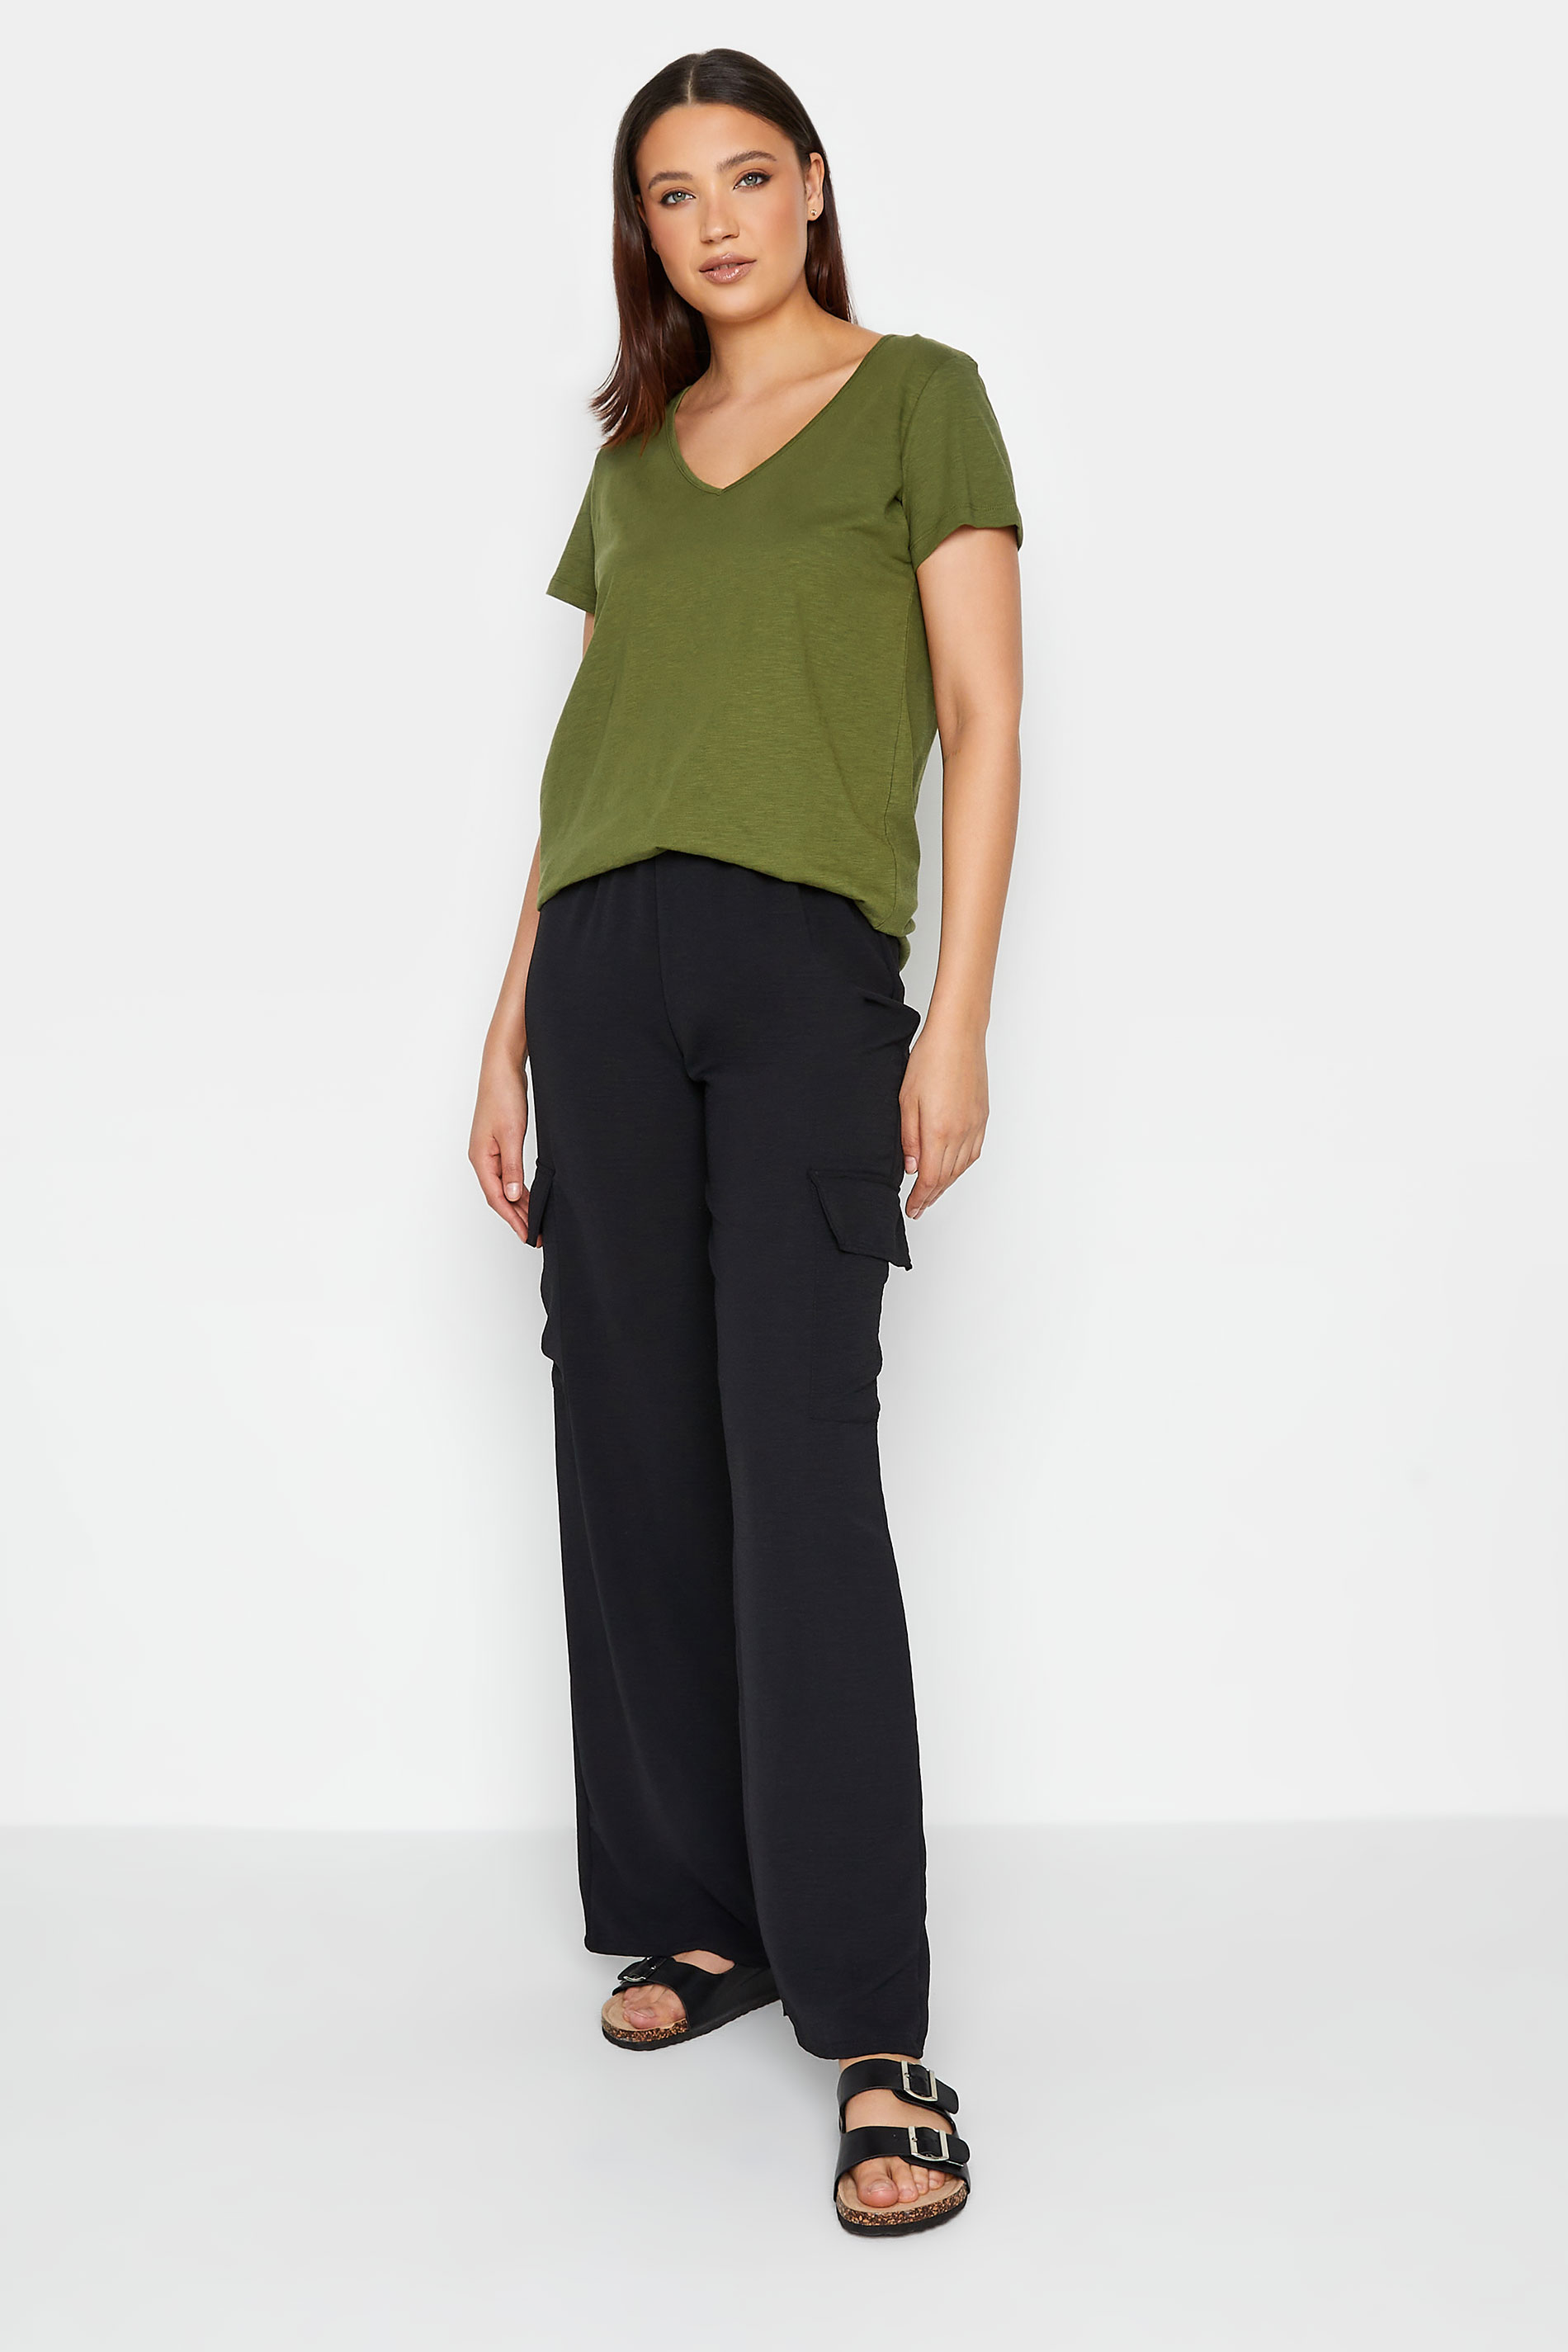 LTS Tall Womens Olive Green Short Sleeve T-Shirt | Long Tall Sally  2